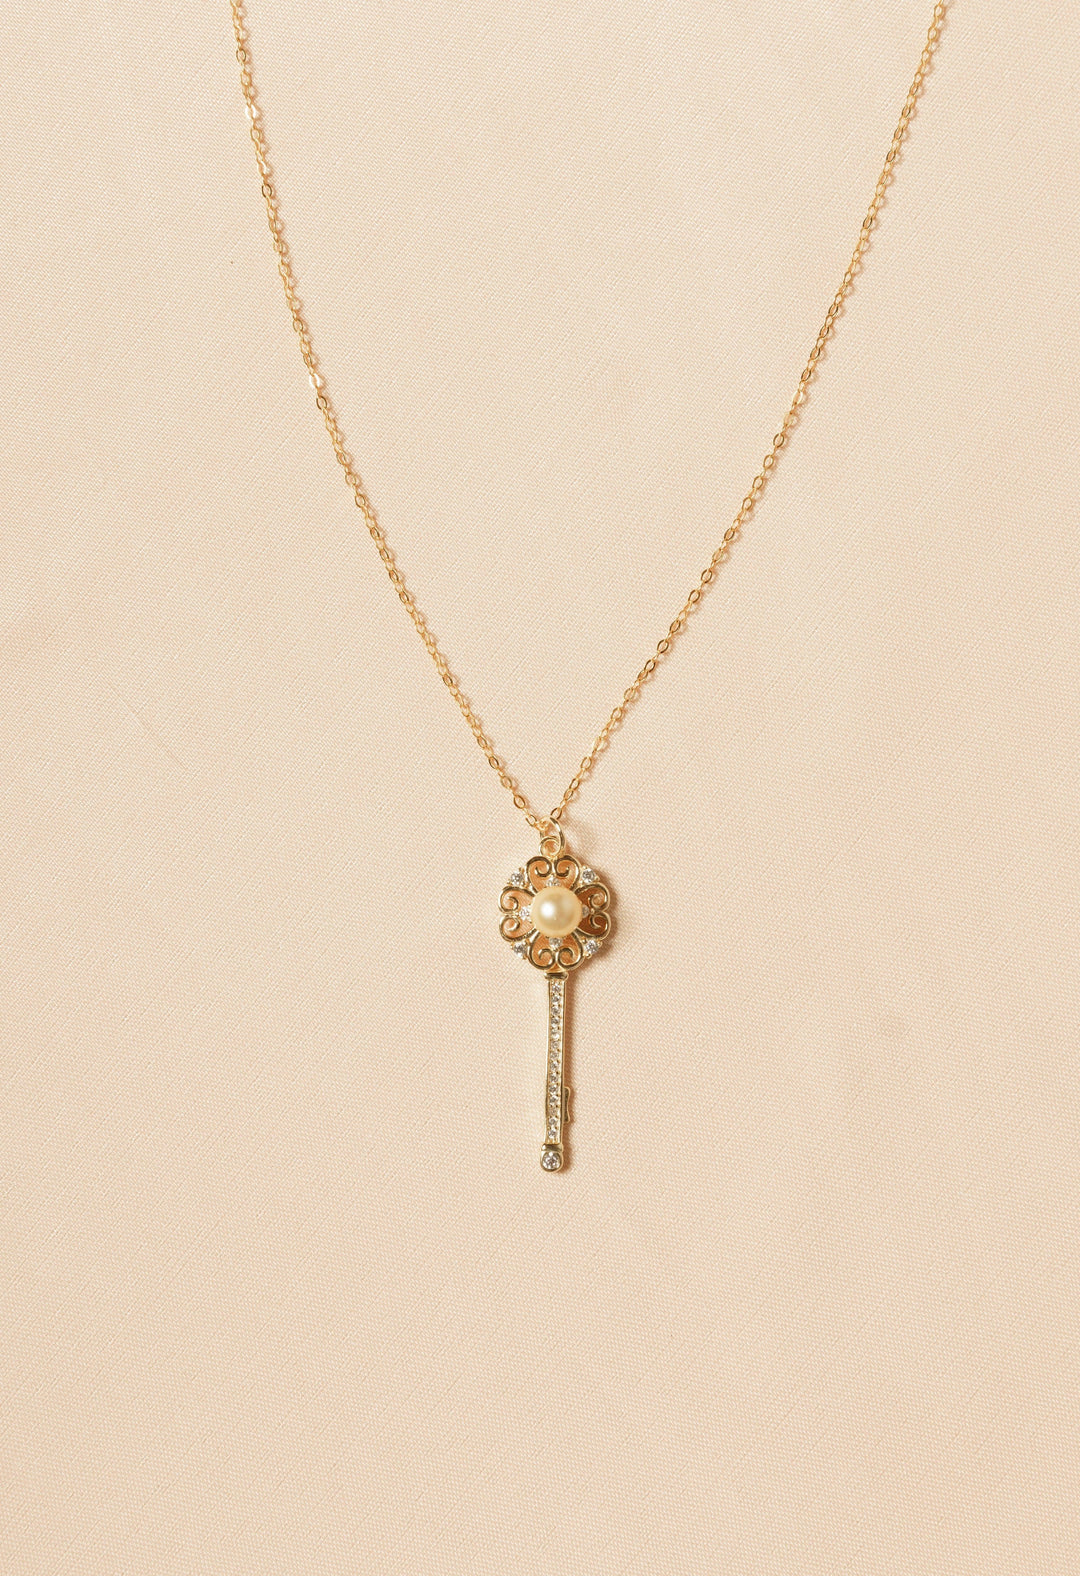 【Everyday Essentials】Golden Key Japanese Akoya Gold Pearl Pendant